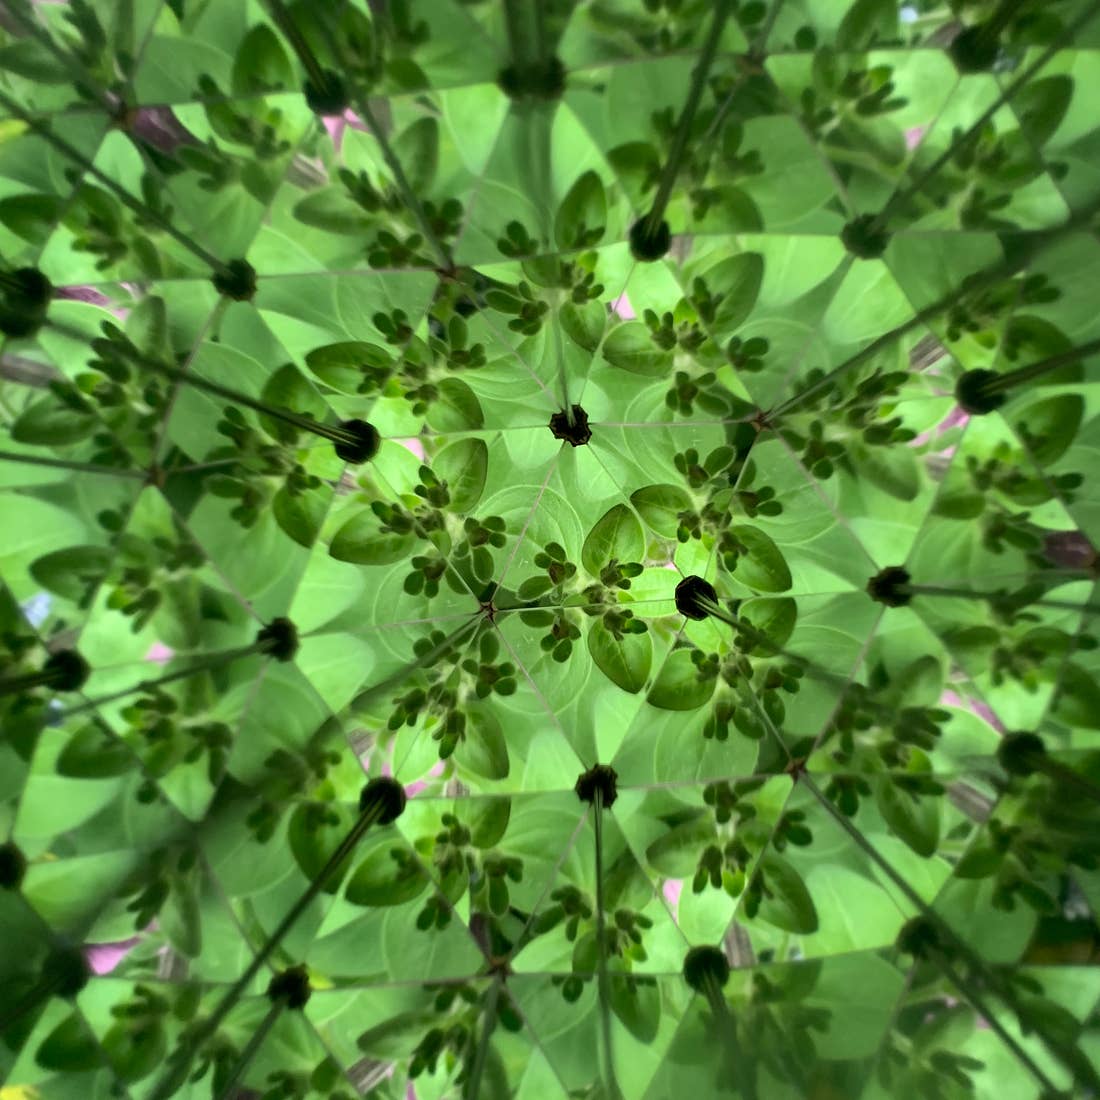 Nature Kaleidoscope